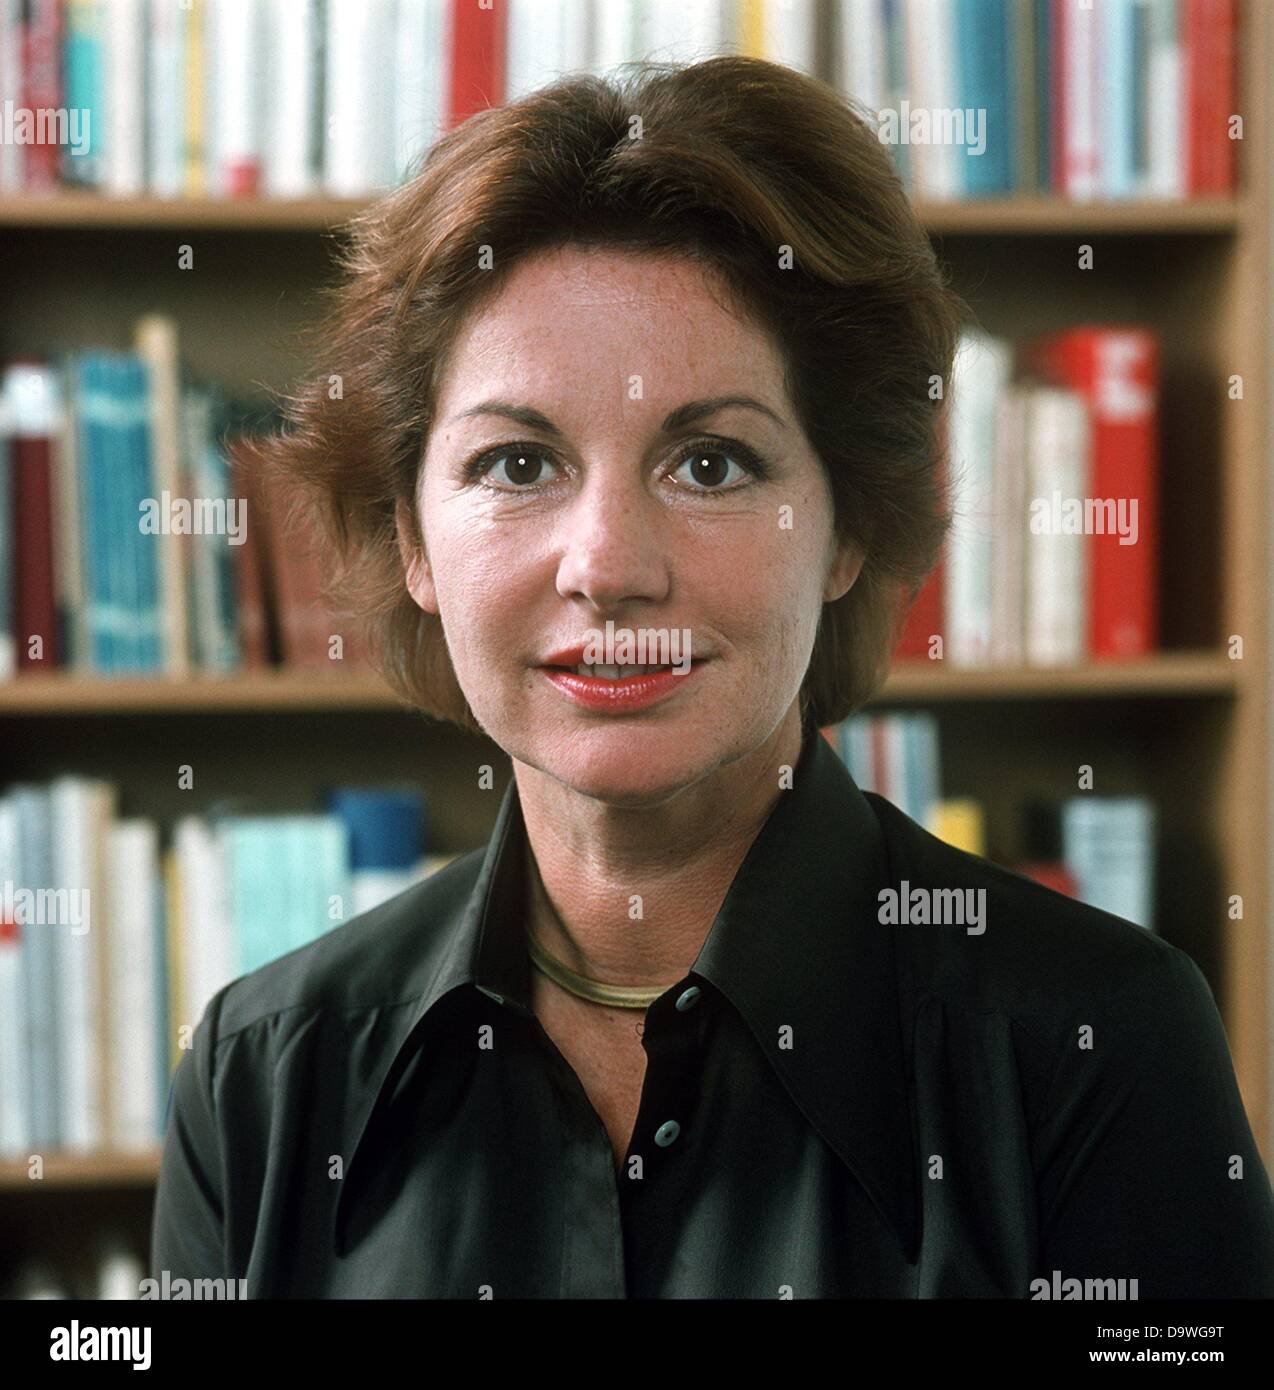 Austrian writer and actress, Johanna von Koczian, photographed in October 1977 at Frankfurt Book Fair. Stock Photo